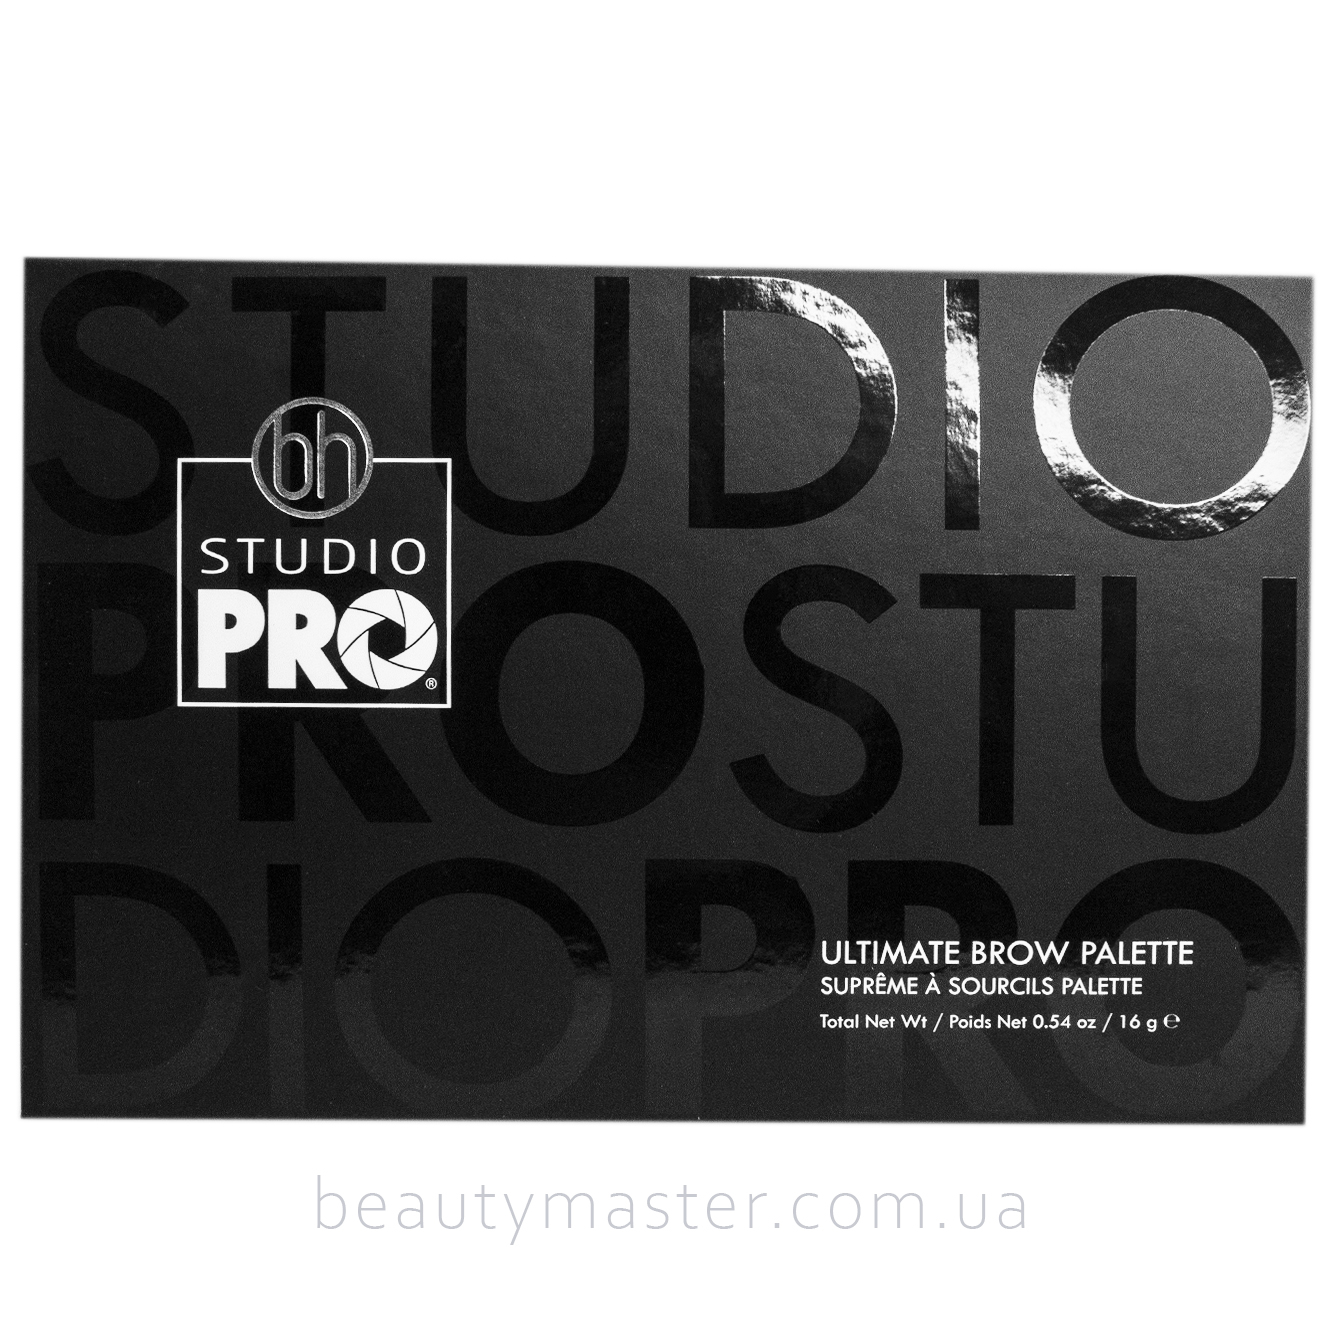 bh studio pro палитра для бровей 8 теней 4 помадки ultimate brow palette